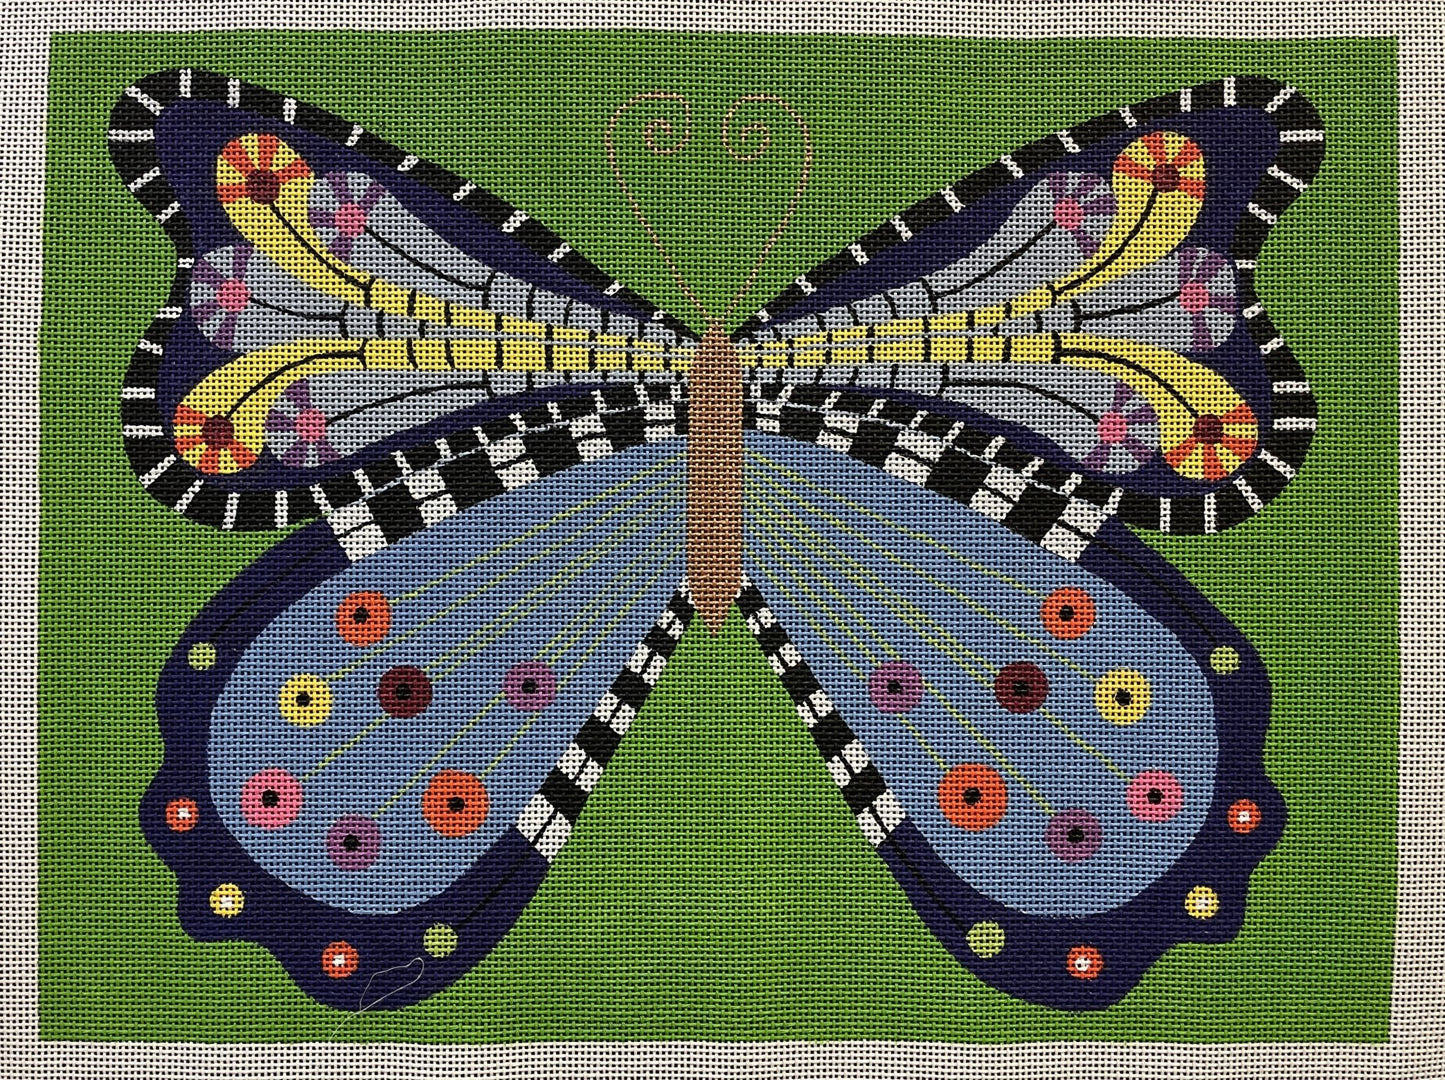 Blue Butterfly Zecca - The Flying Needles